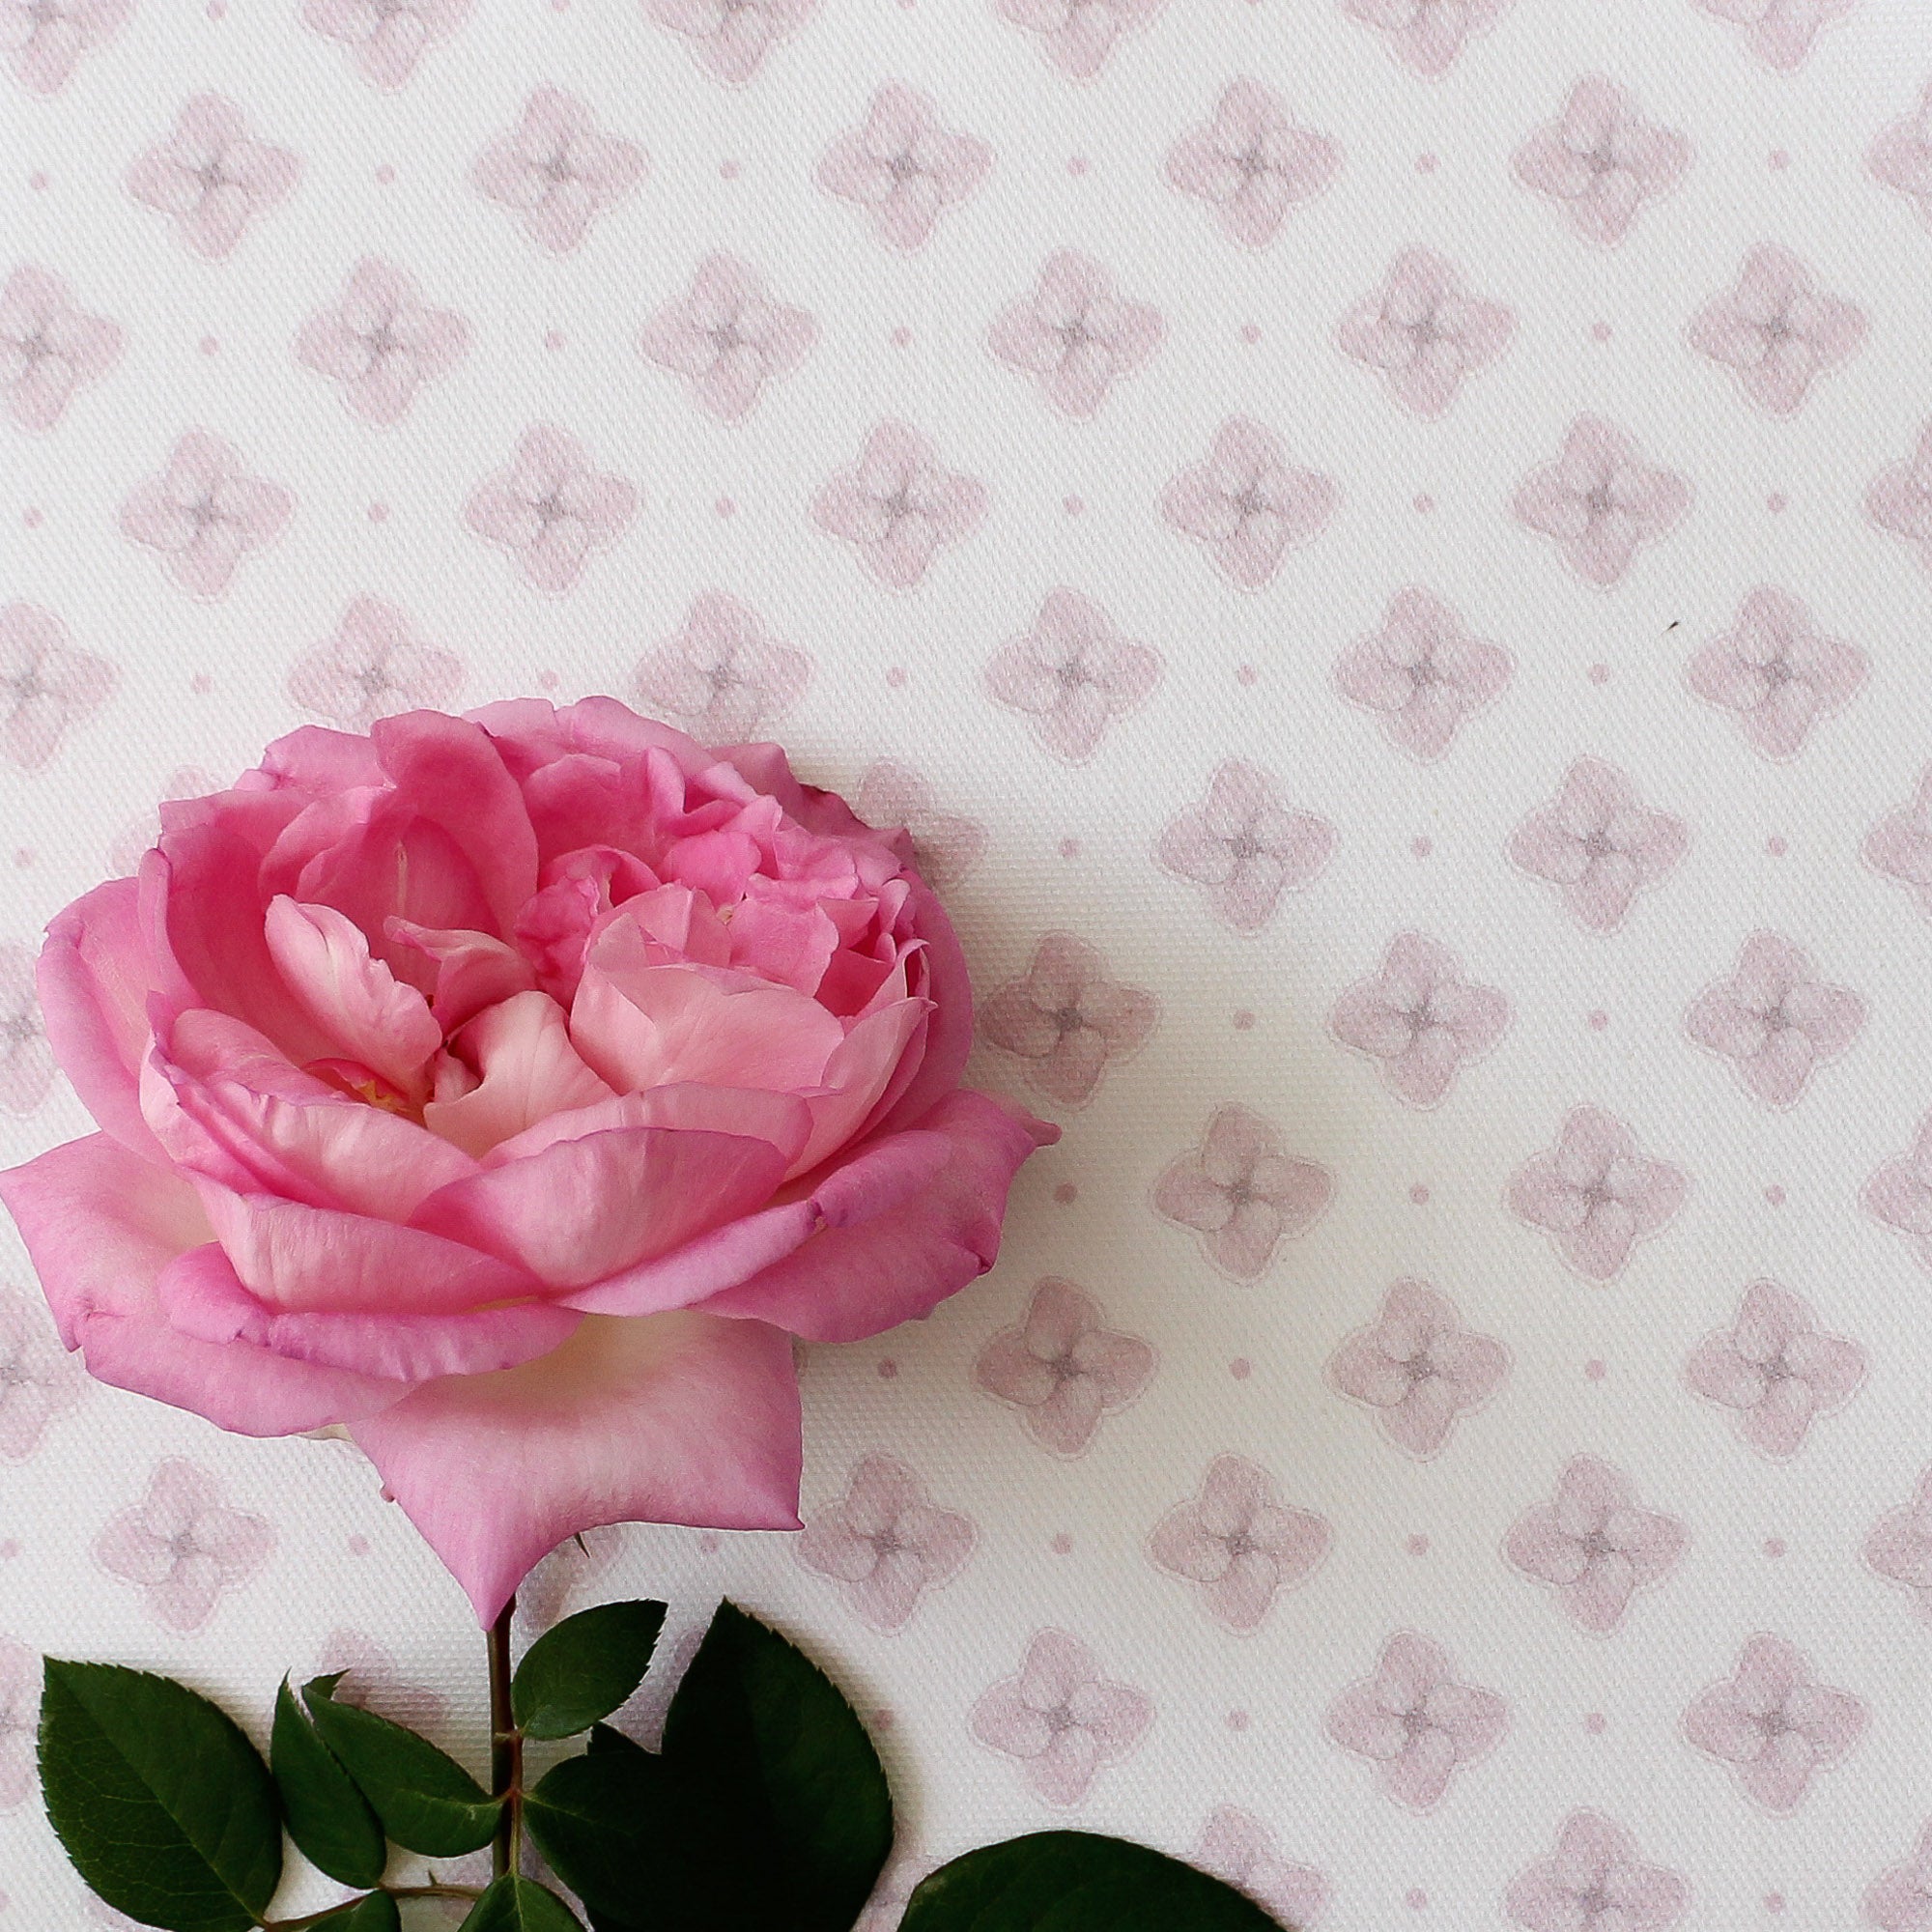 Hydrangea Petal Fabric - Pink - Hydrangea Lane Home